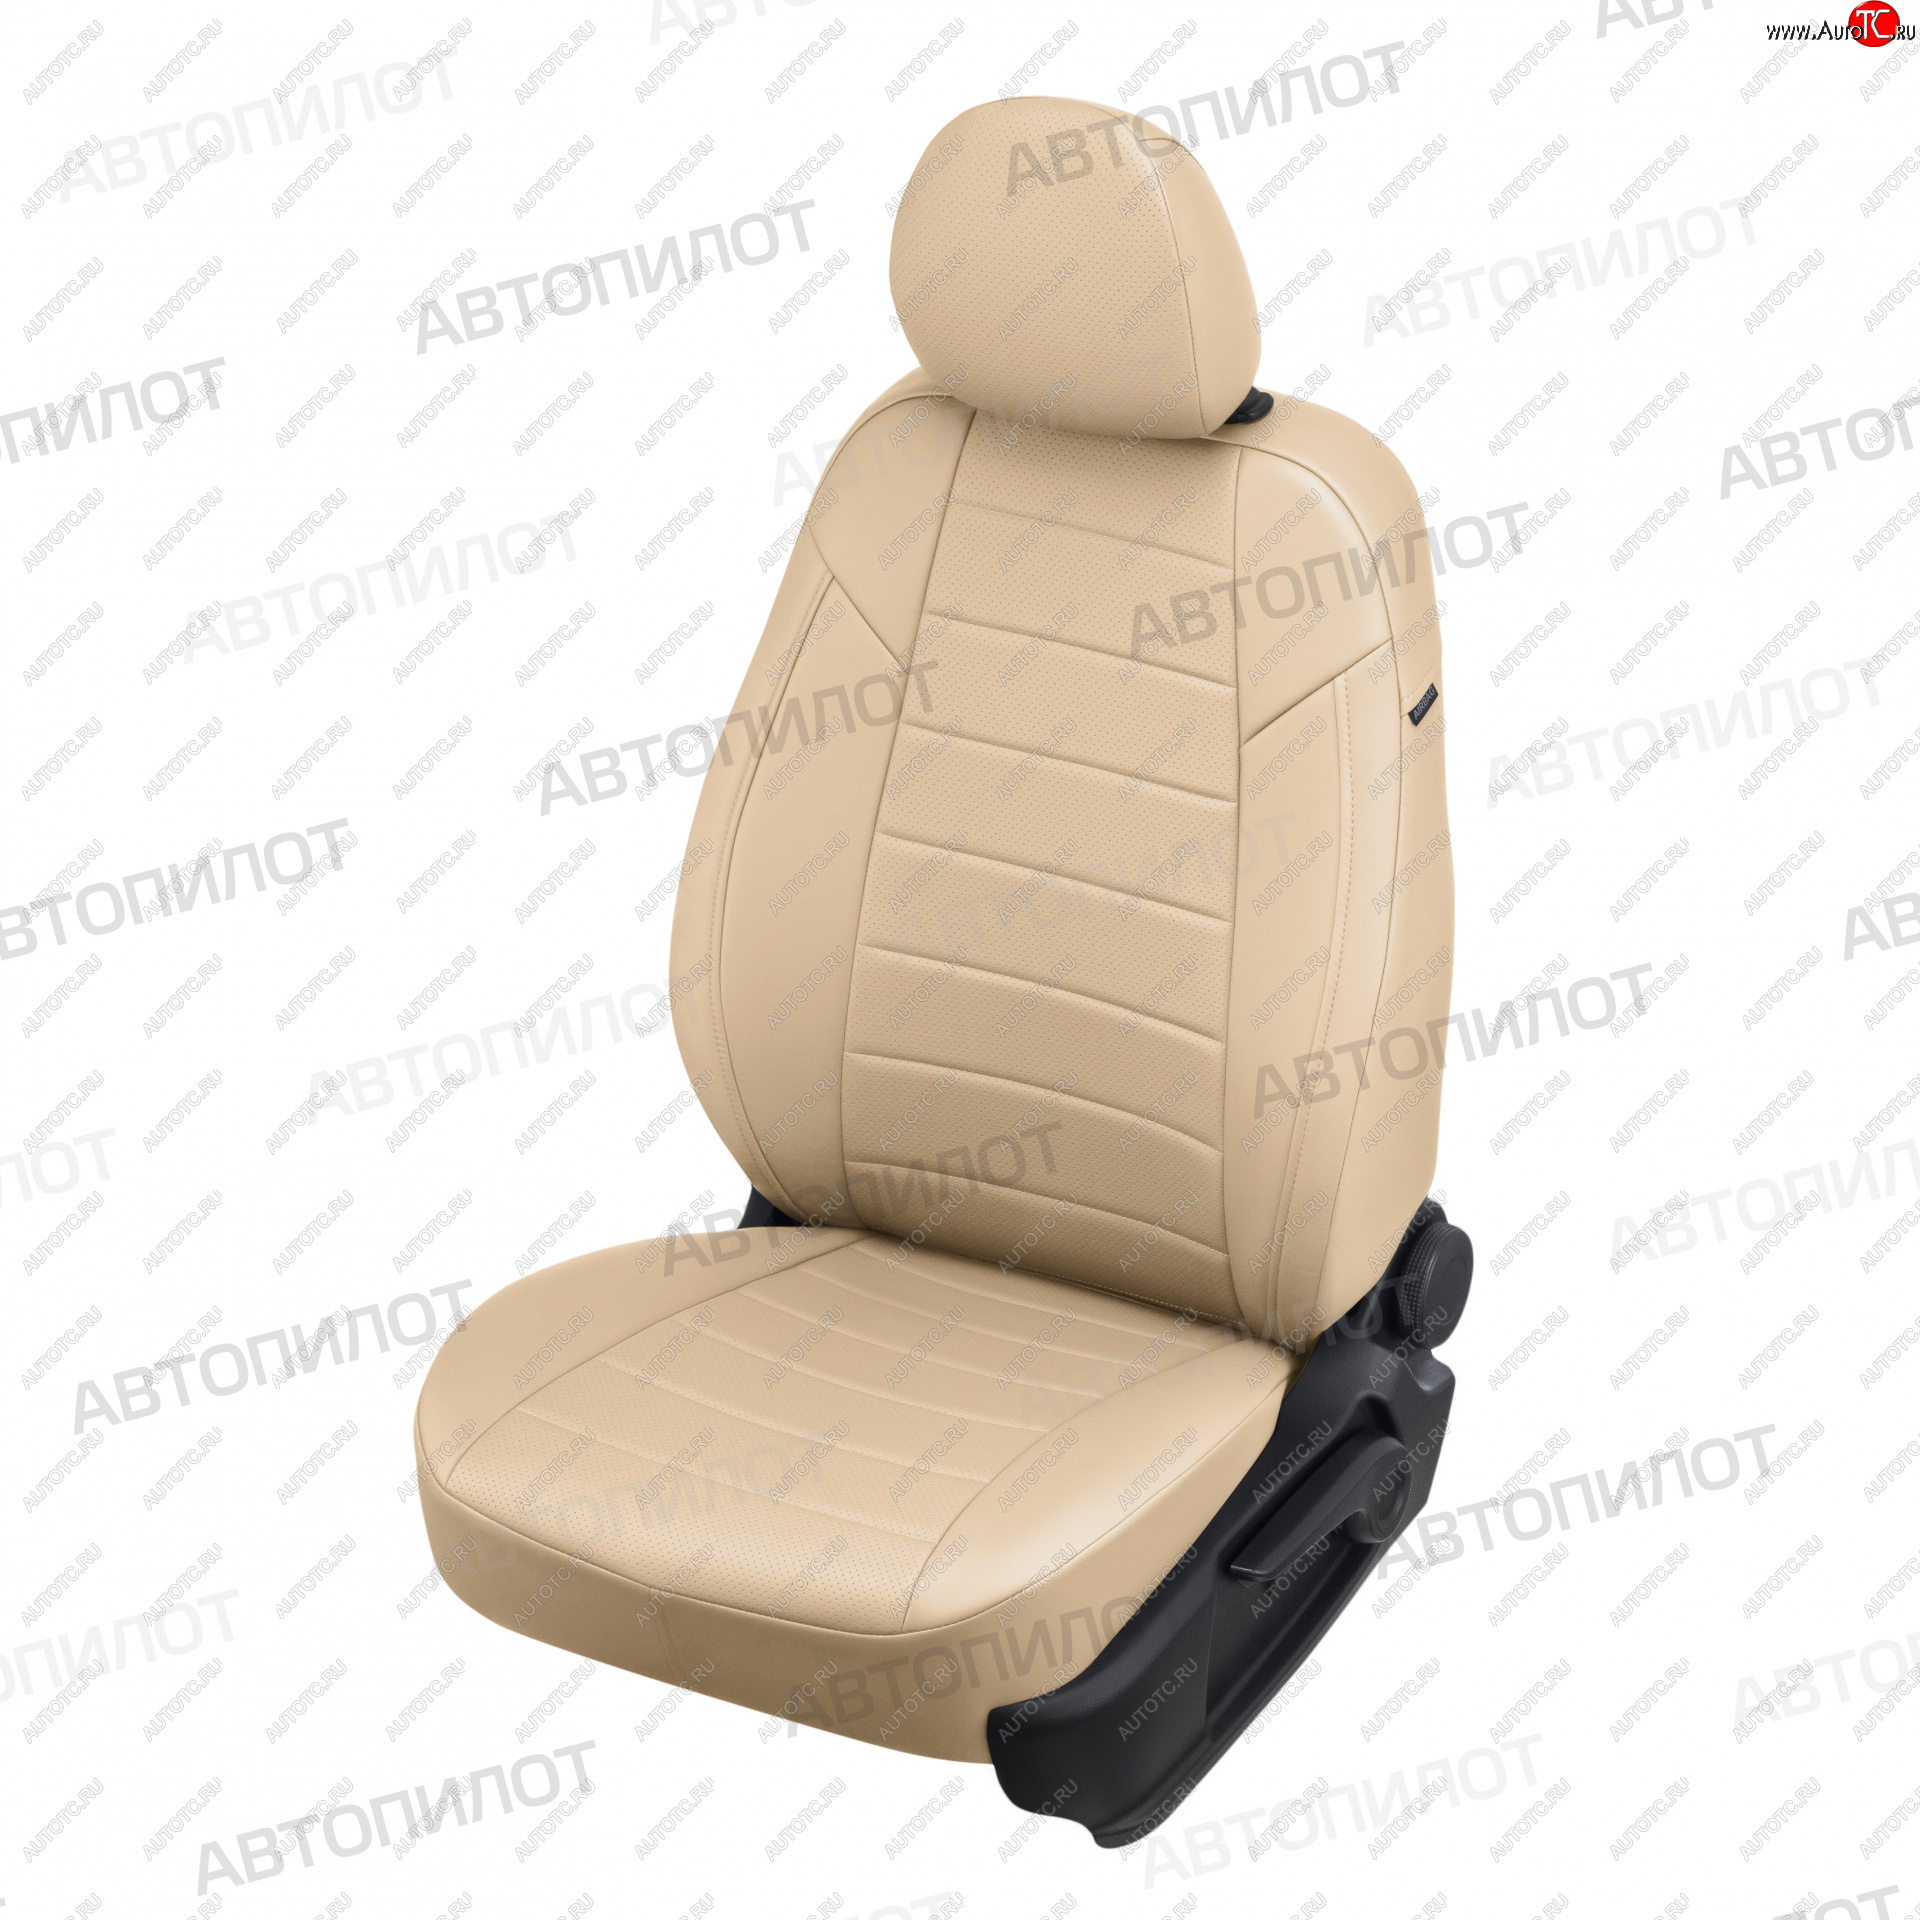 13 849 р. Чехлы сидений (5 мест, экокожа) Автопилот  Ford Galaxy  2 (2006-2015) (бежевый)